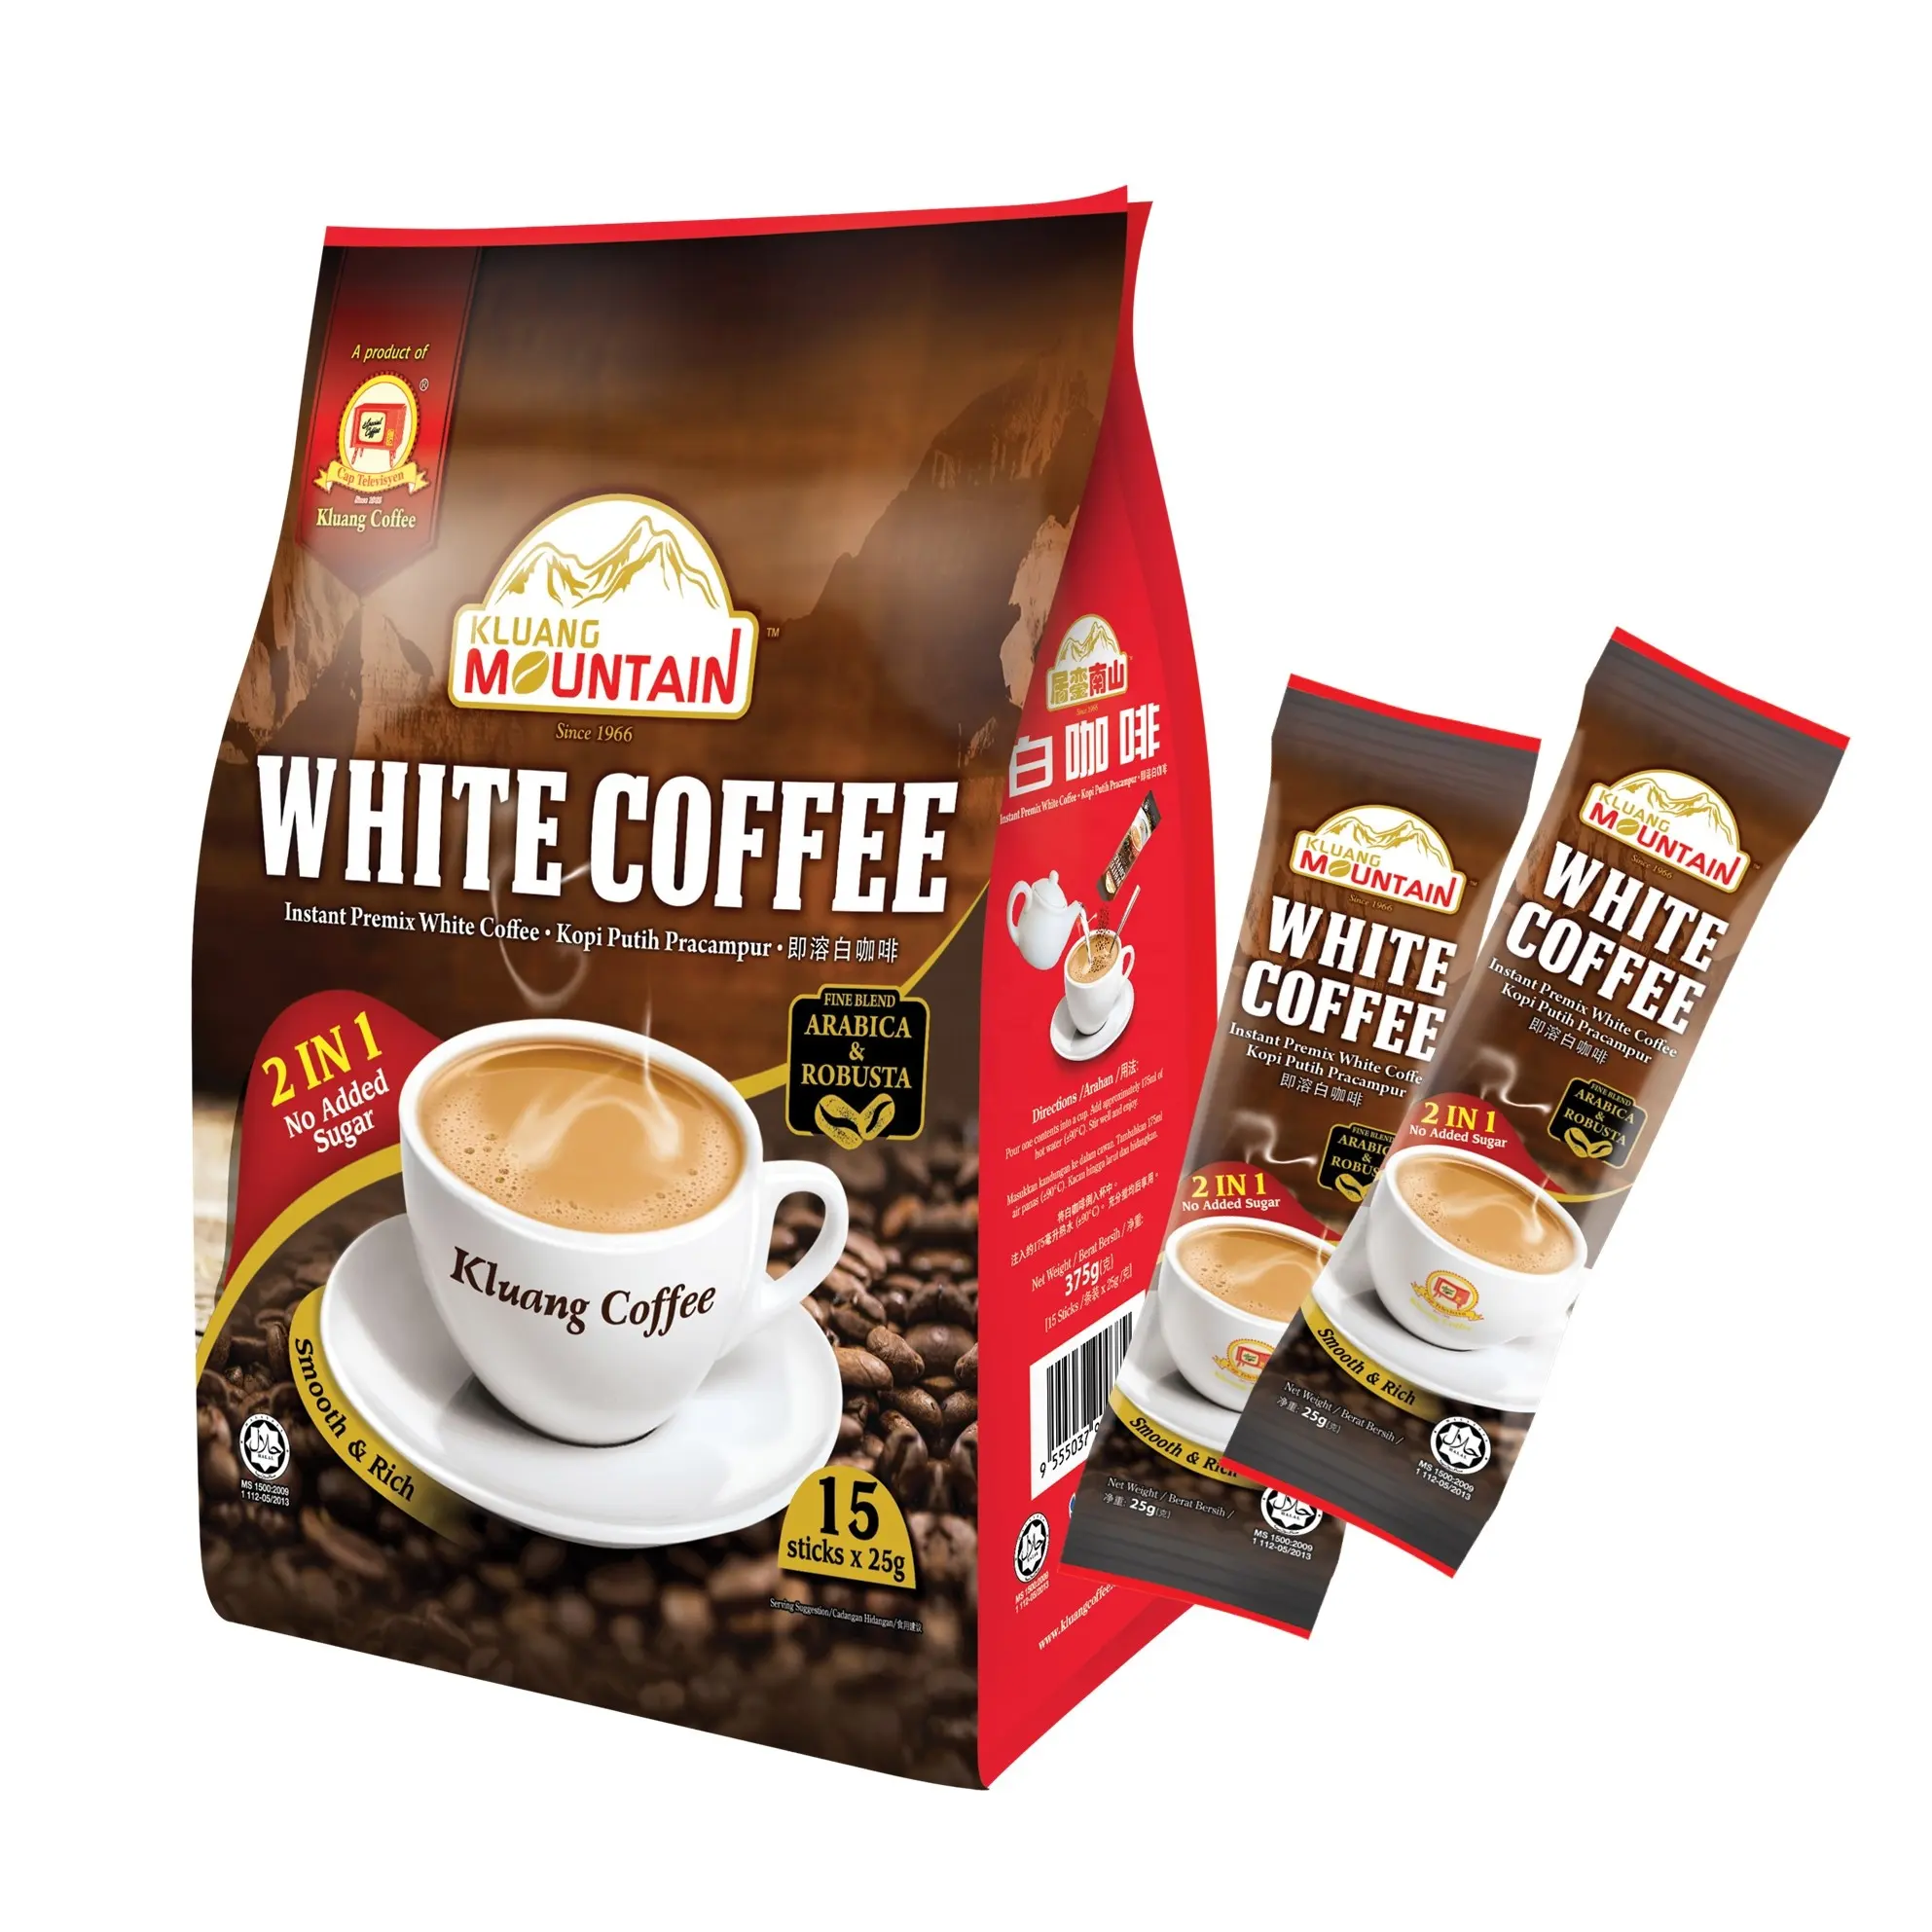 Kluang Mountain Instant White Coffee 2 in 1 (No Added Sugar) Malaysia HALAL (15 Sticks x 25g) Televisyen Brand Net Weight 375g